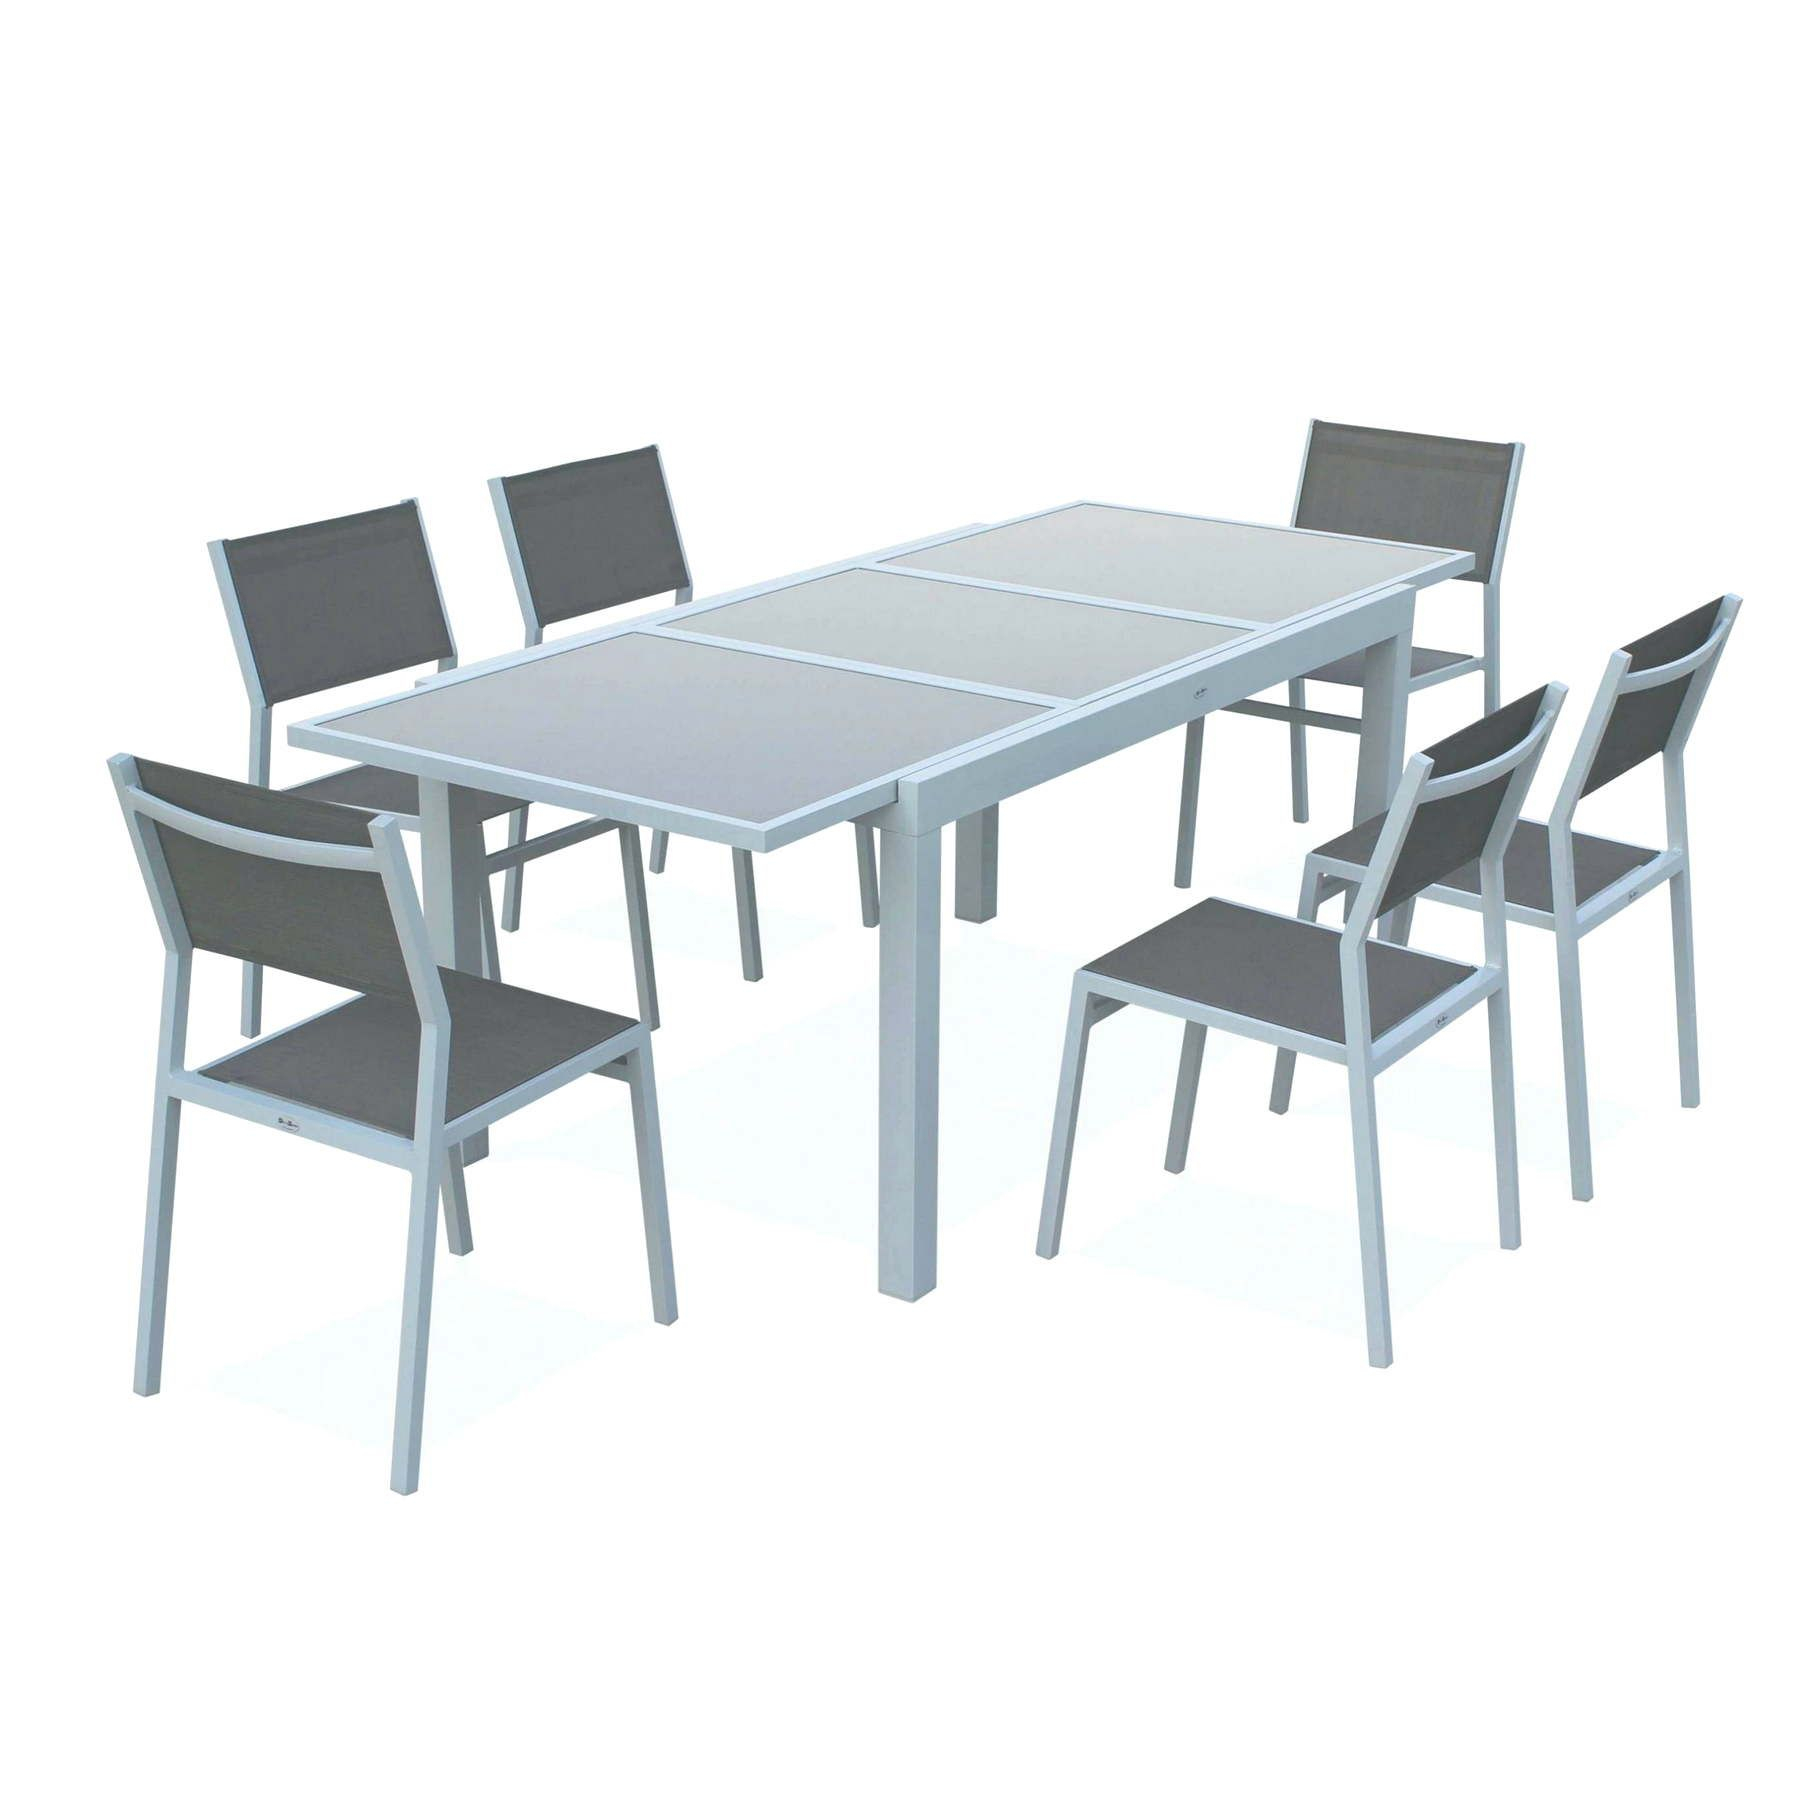 77 Table Basse Aluminium Check More At Https://leonstafford ... à Table De Jardin Ikea